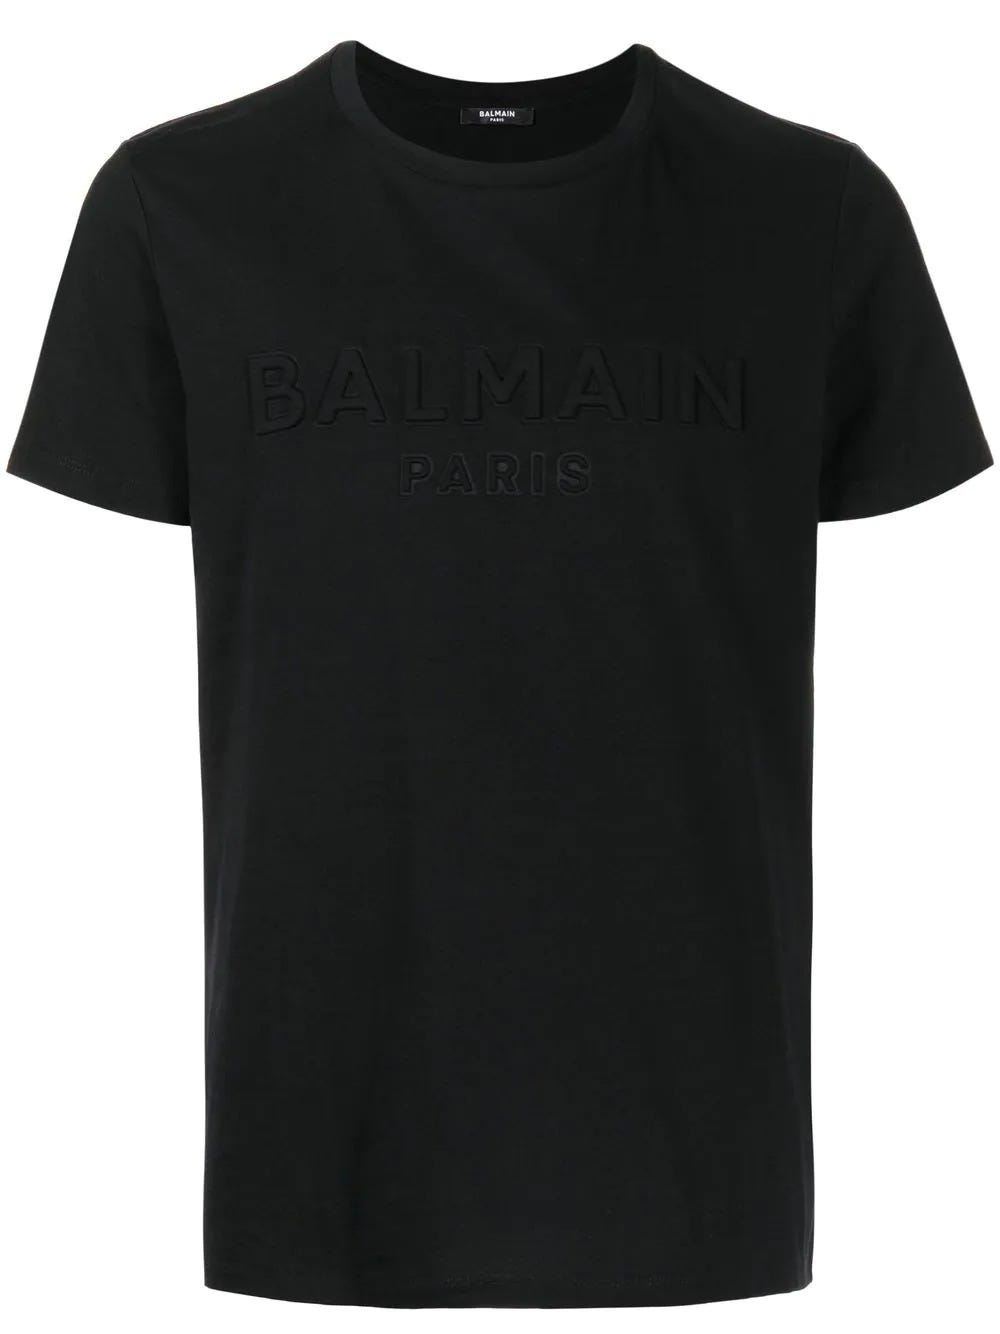 BALMAIN BLACK T-SHIRT WITH EMBOSSED LOGO